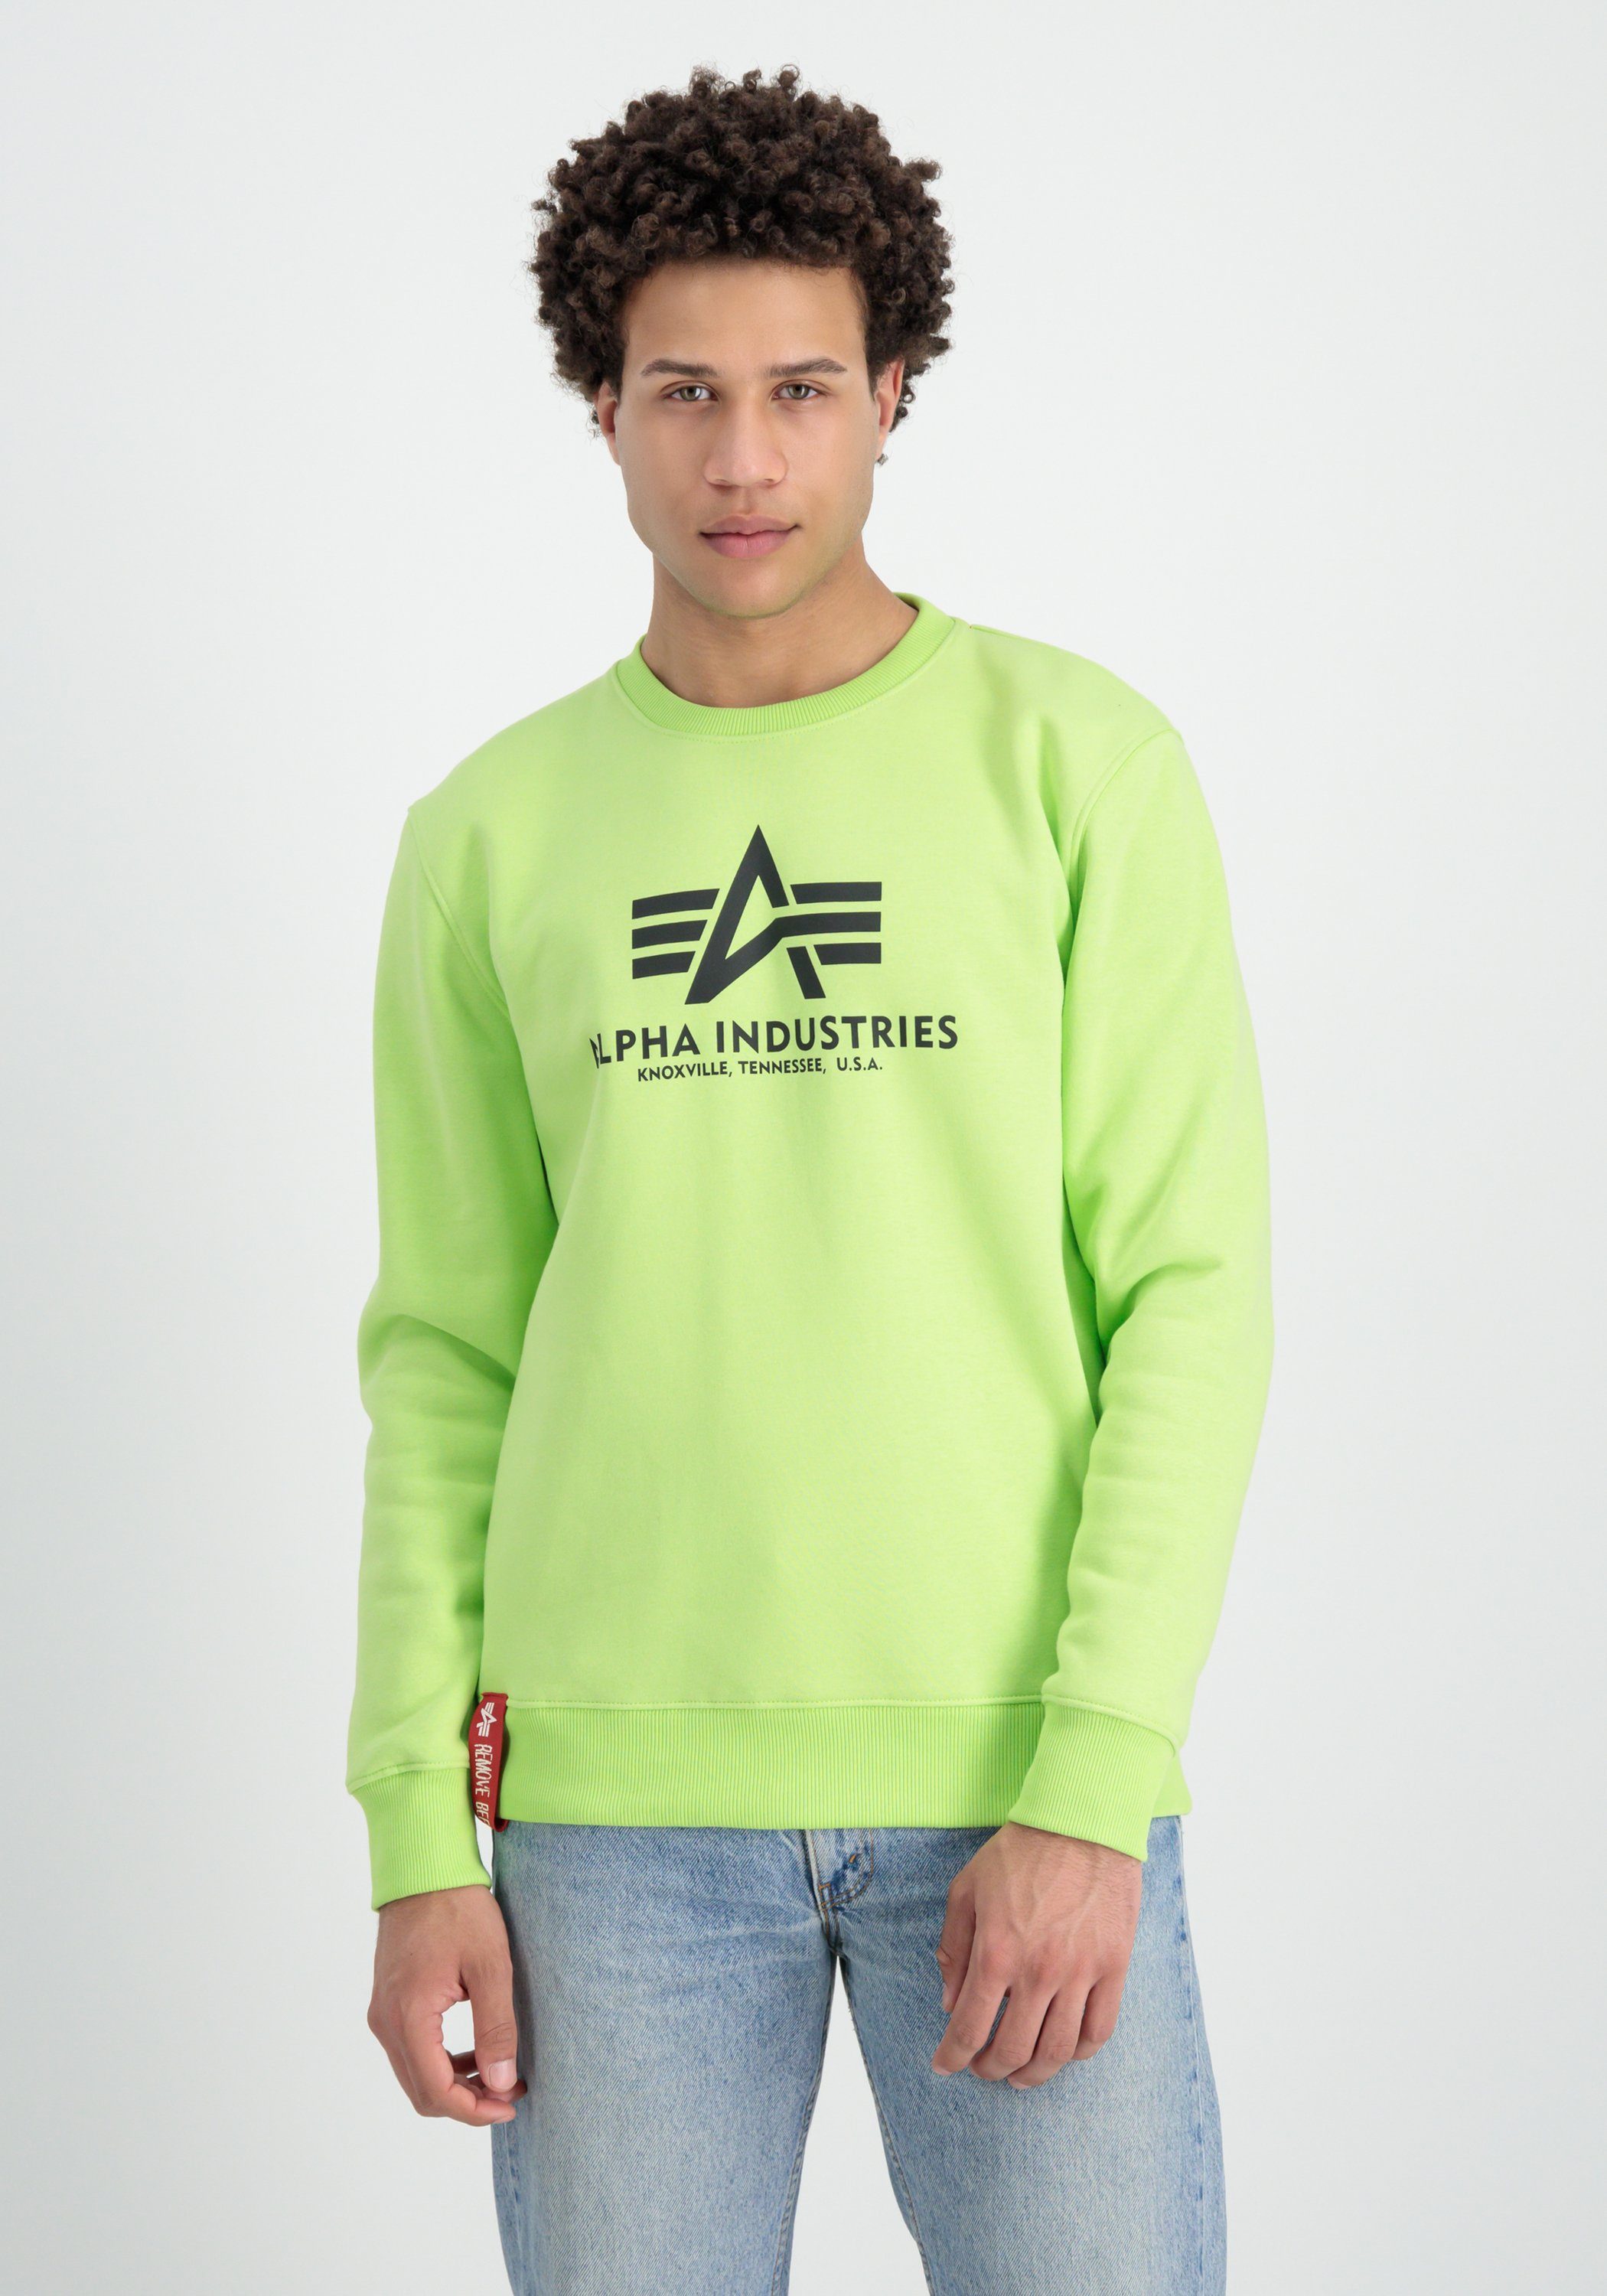 Alpha Industries Sweater Alpha Industries Sweater green Sweatshirts Men - Basic hornet